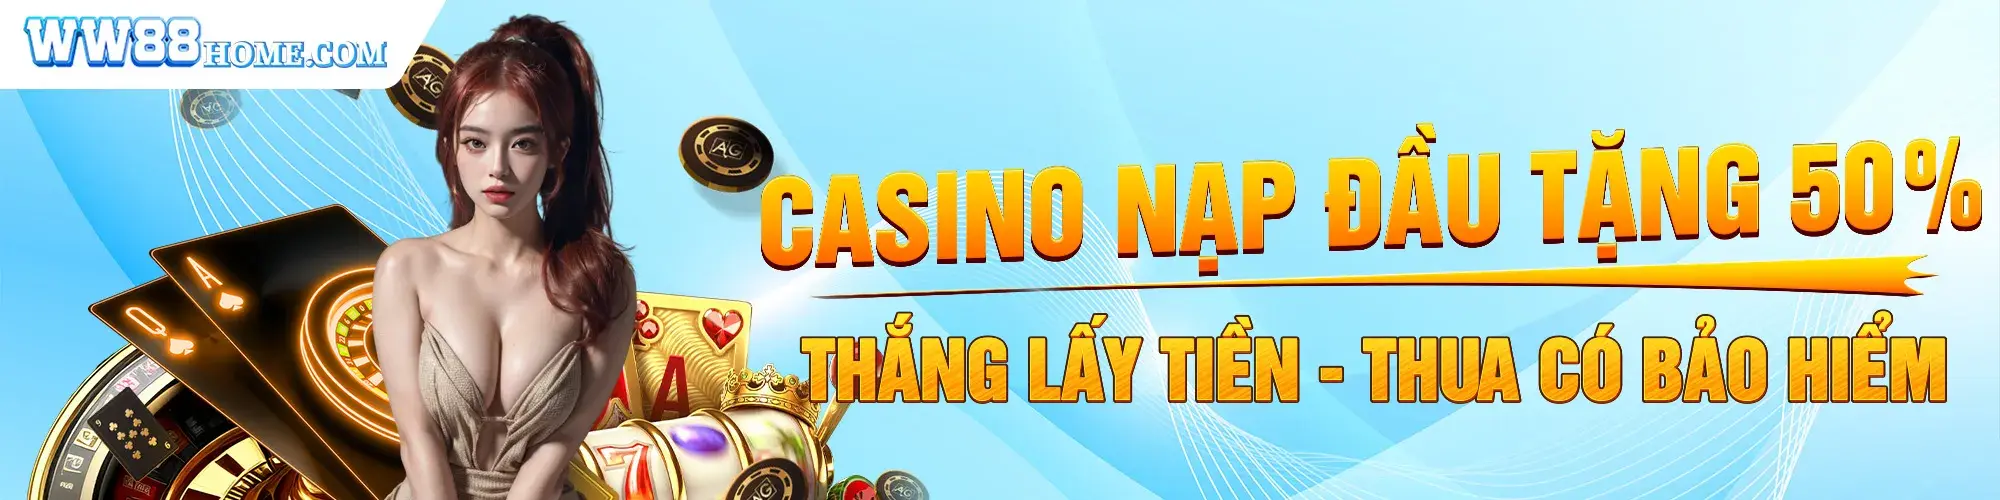 banner-casino-ww88